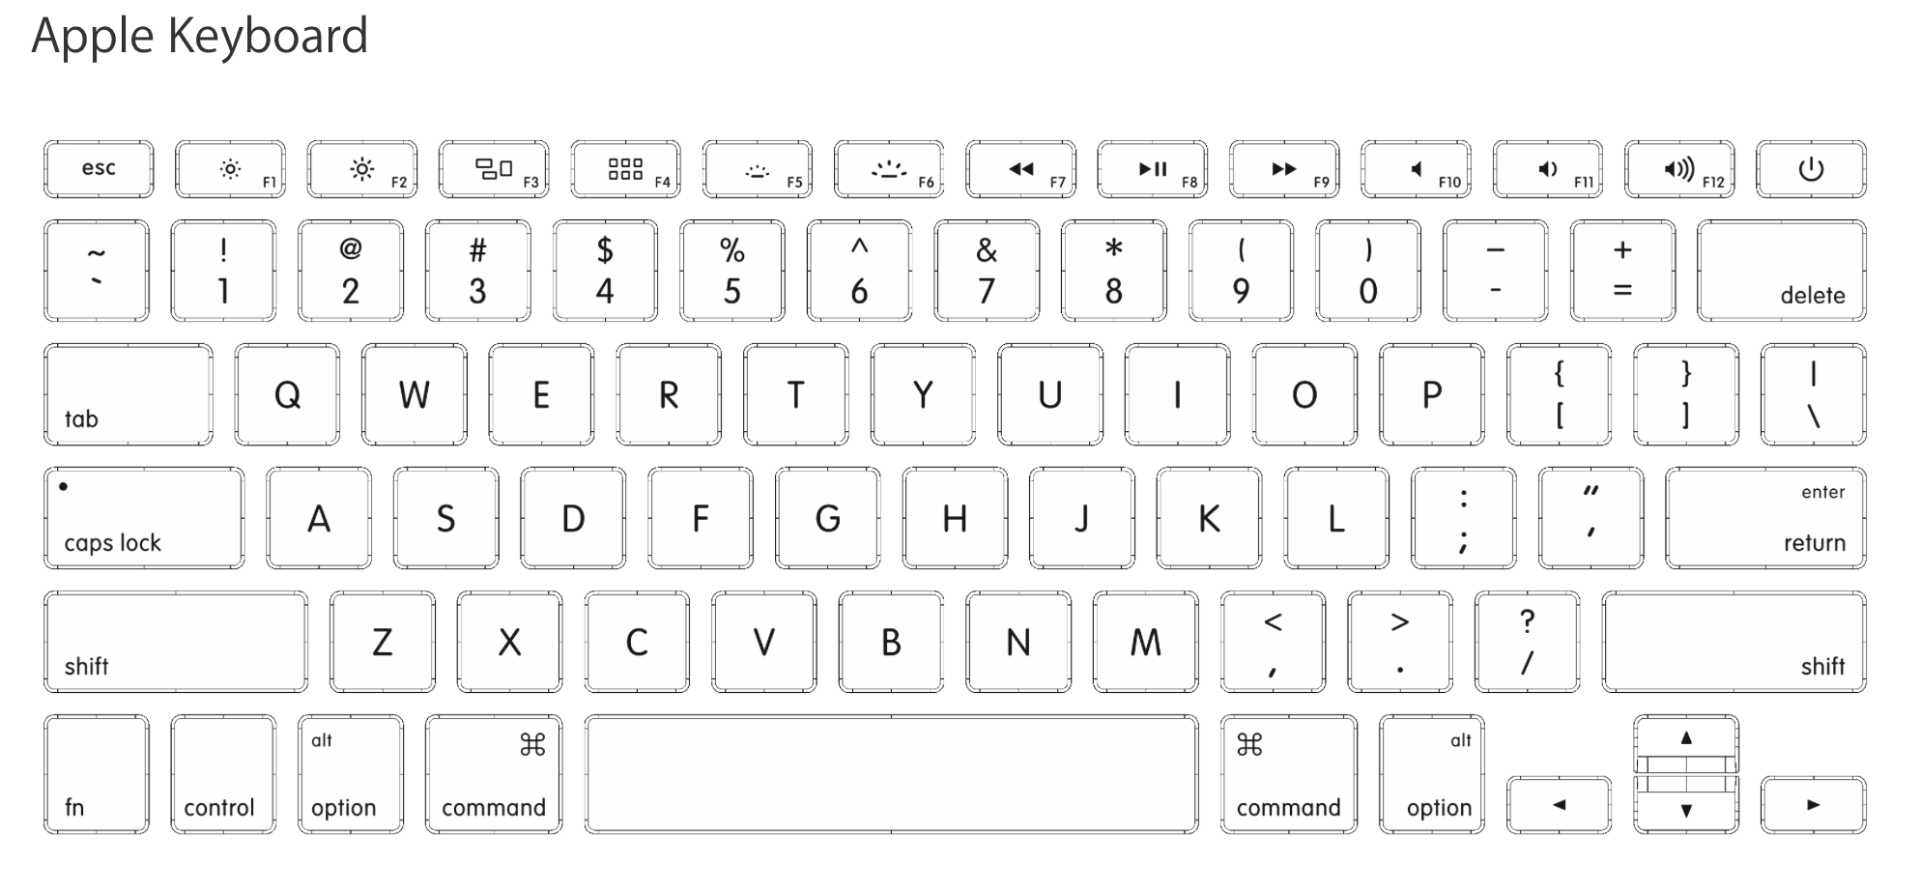 Keyboard Typing Incorrect Charac… - Community